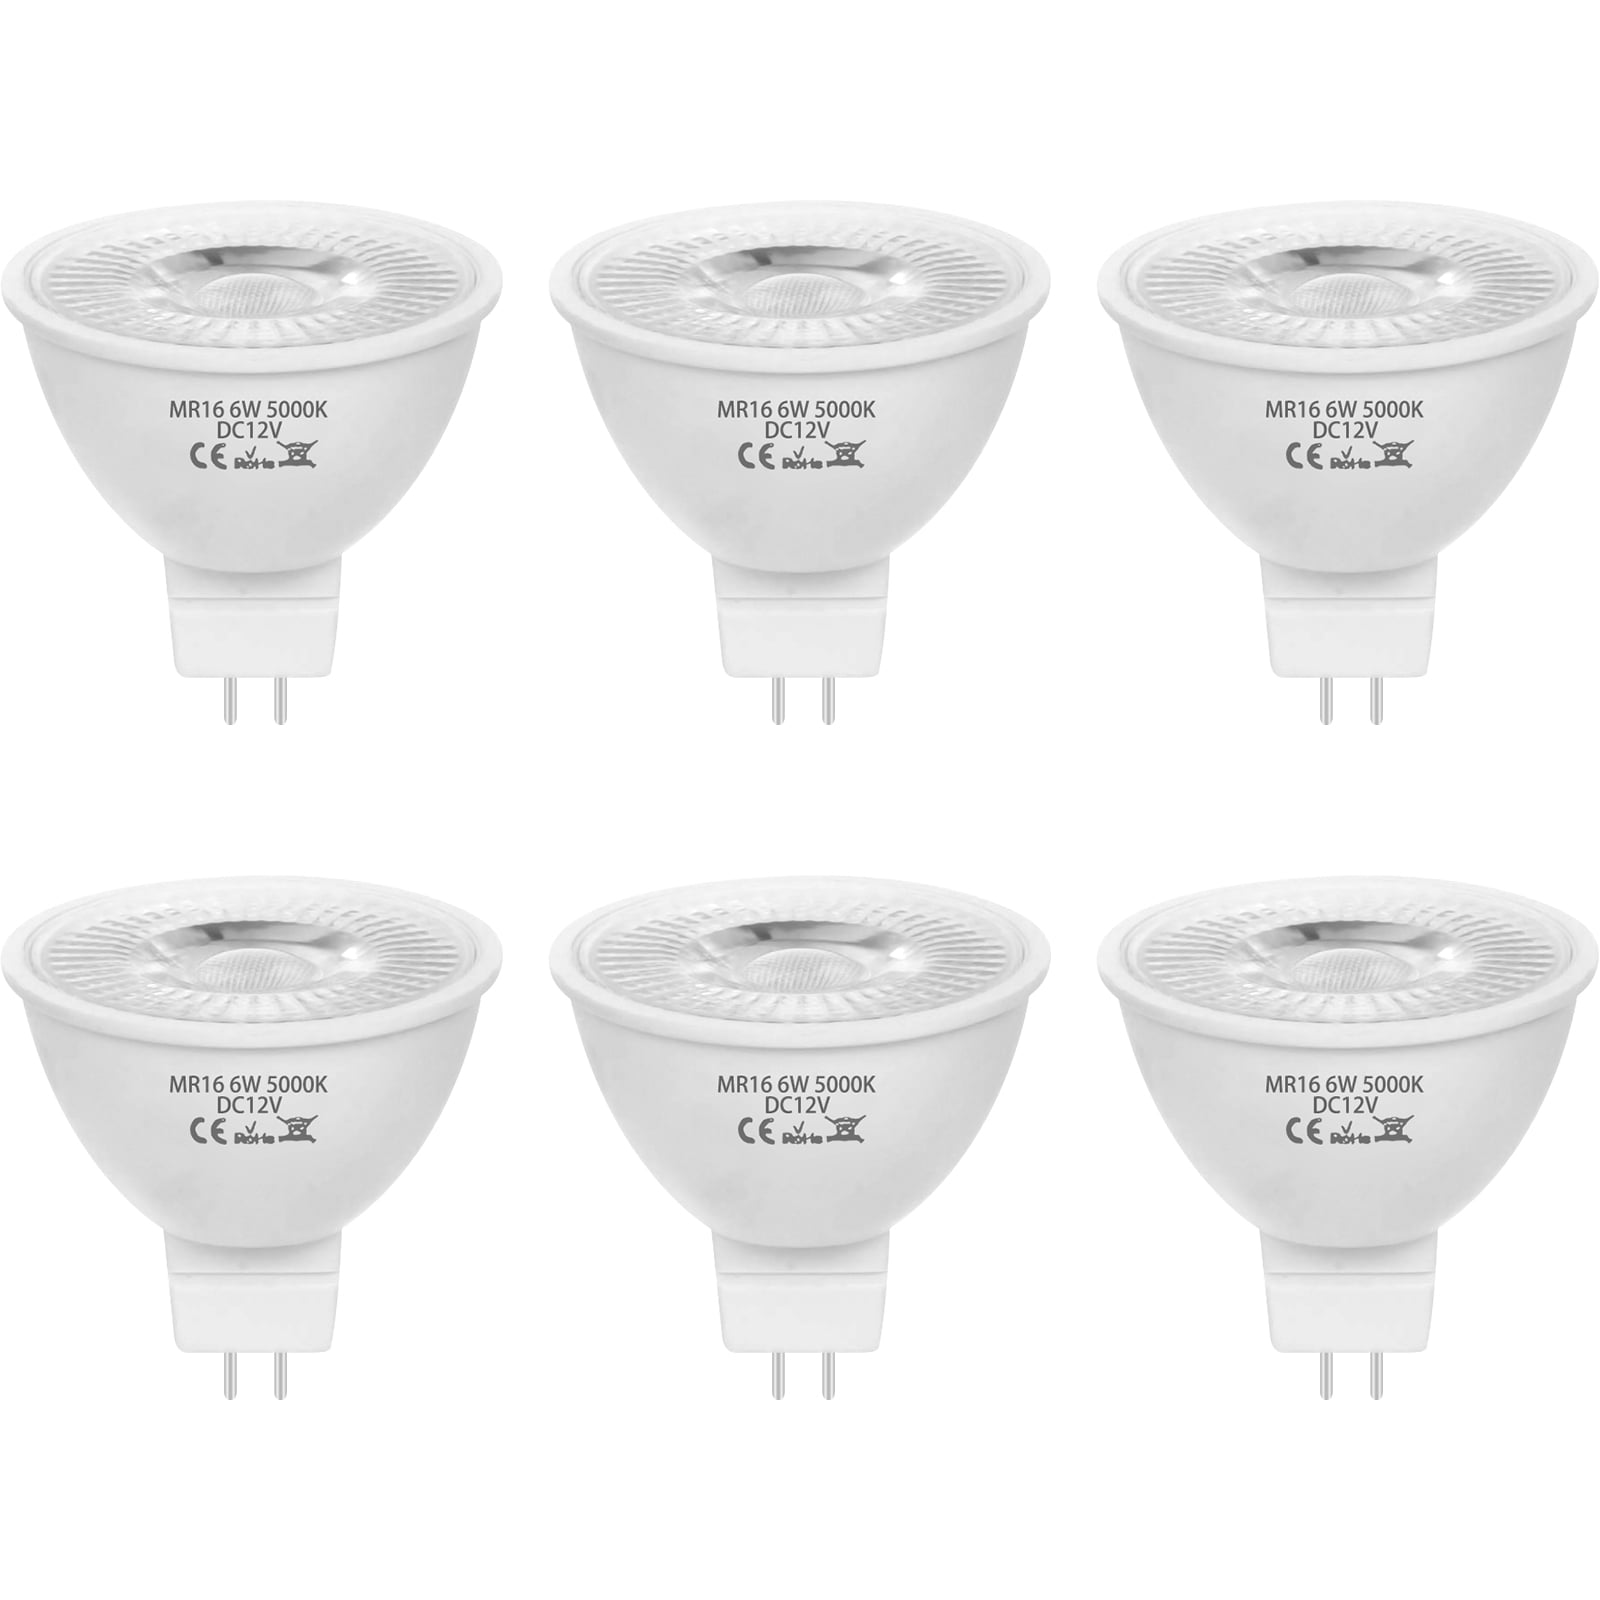 Simba Lighting LED MR16 5W 35W-50W Halogen Replacement Bulbs 12V GU5.3  BiPin 2700K Soft White 6-Pack